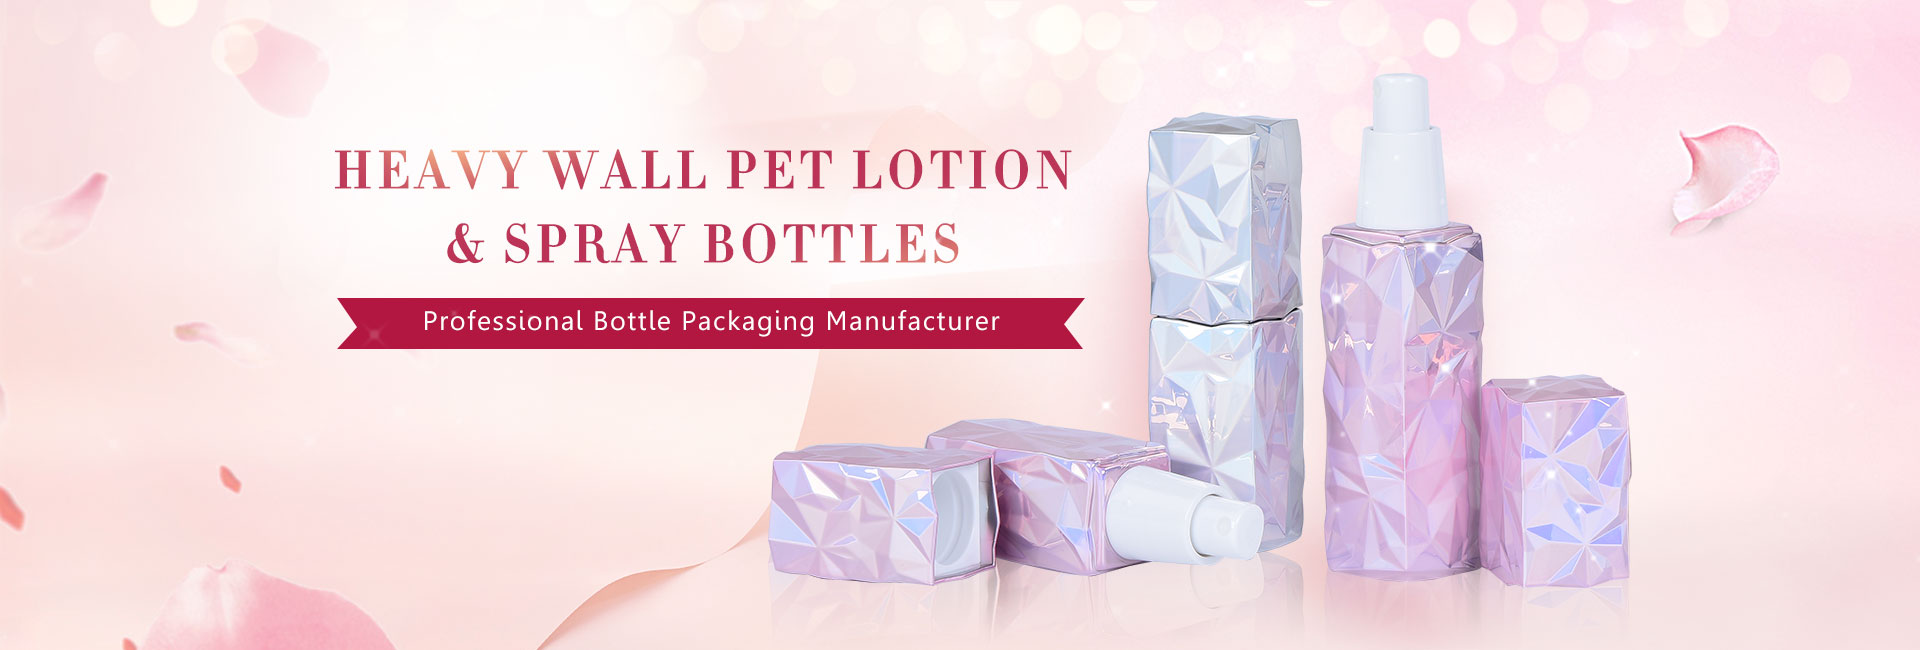 PET empty lotion bottles